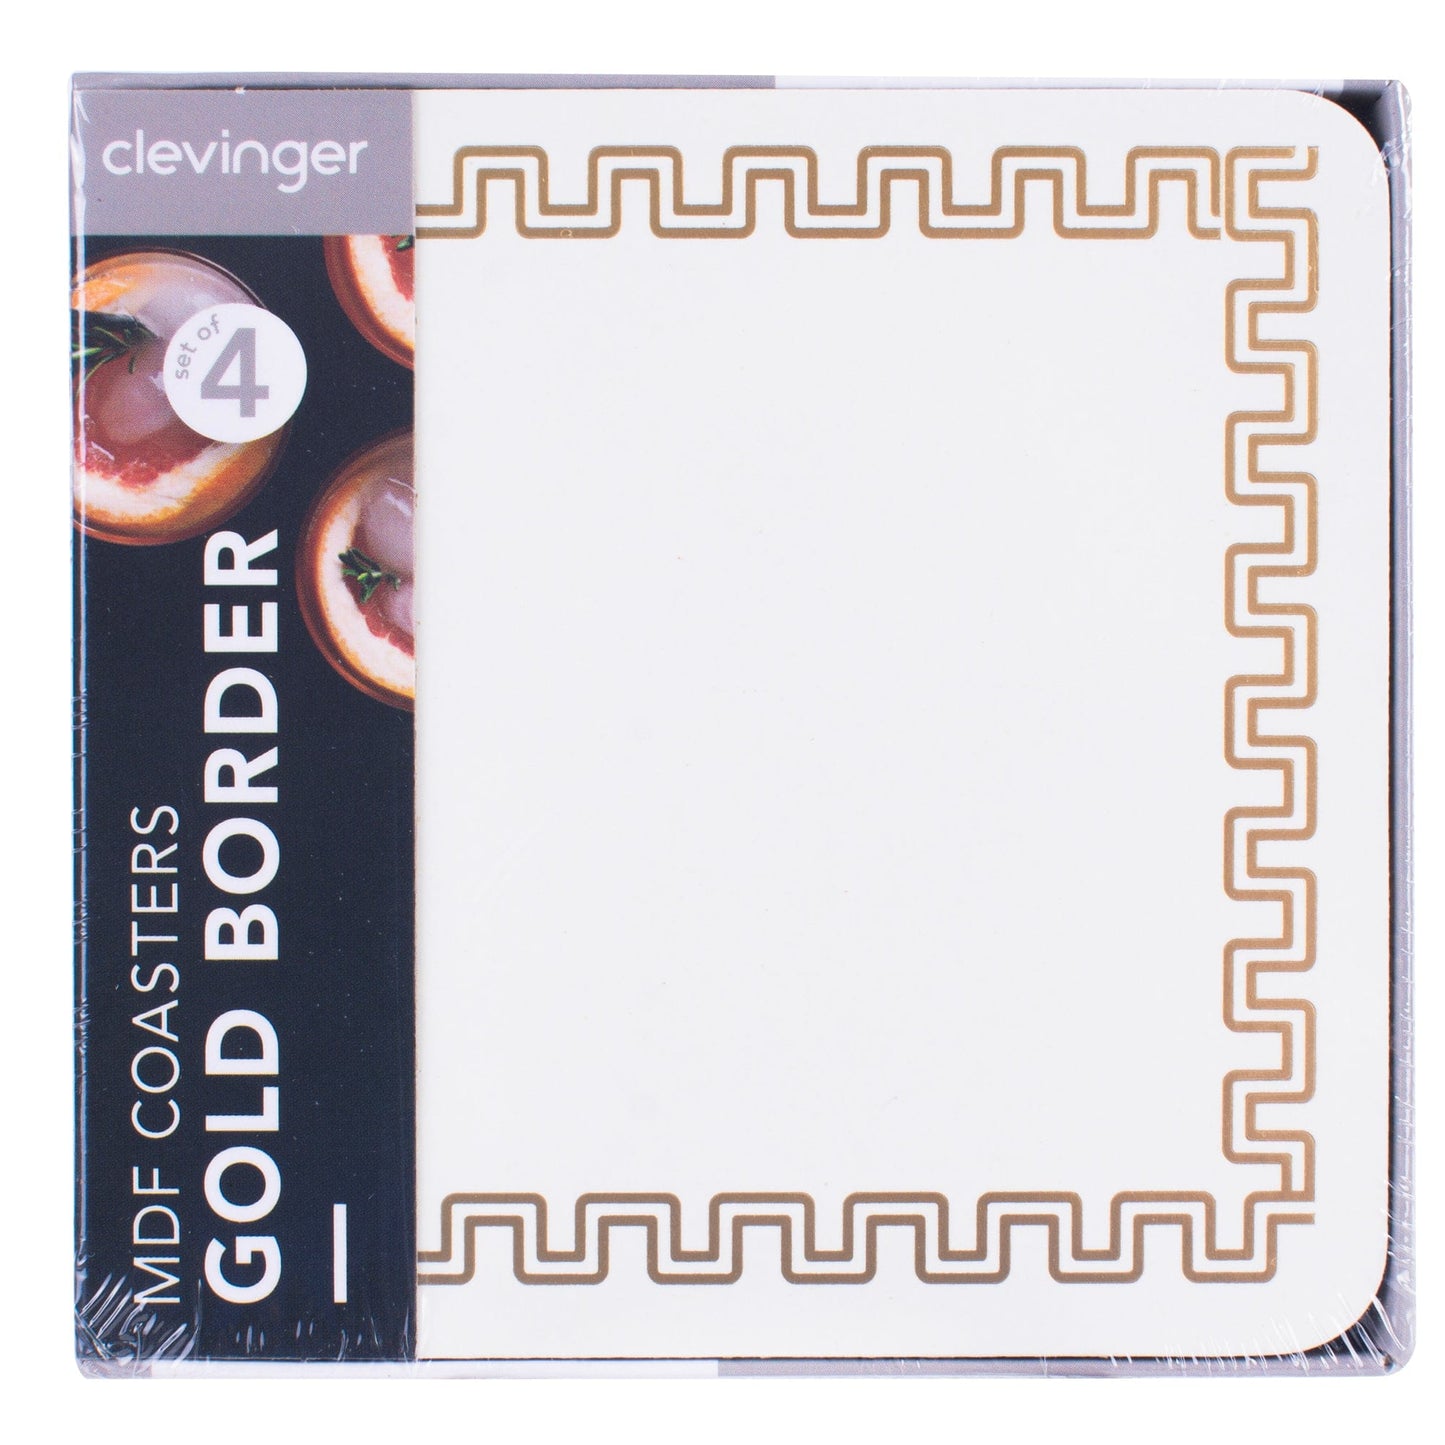 Clevinger dining coster Clevinger Set of 4 MDF Coasters Gold Border